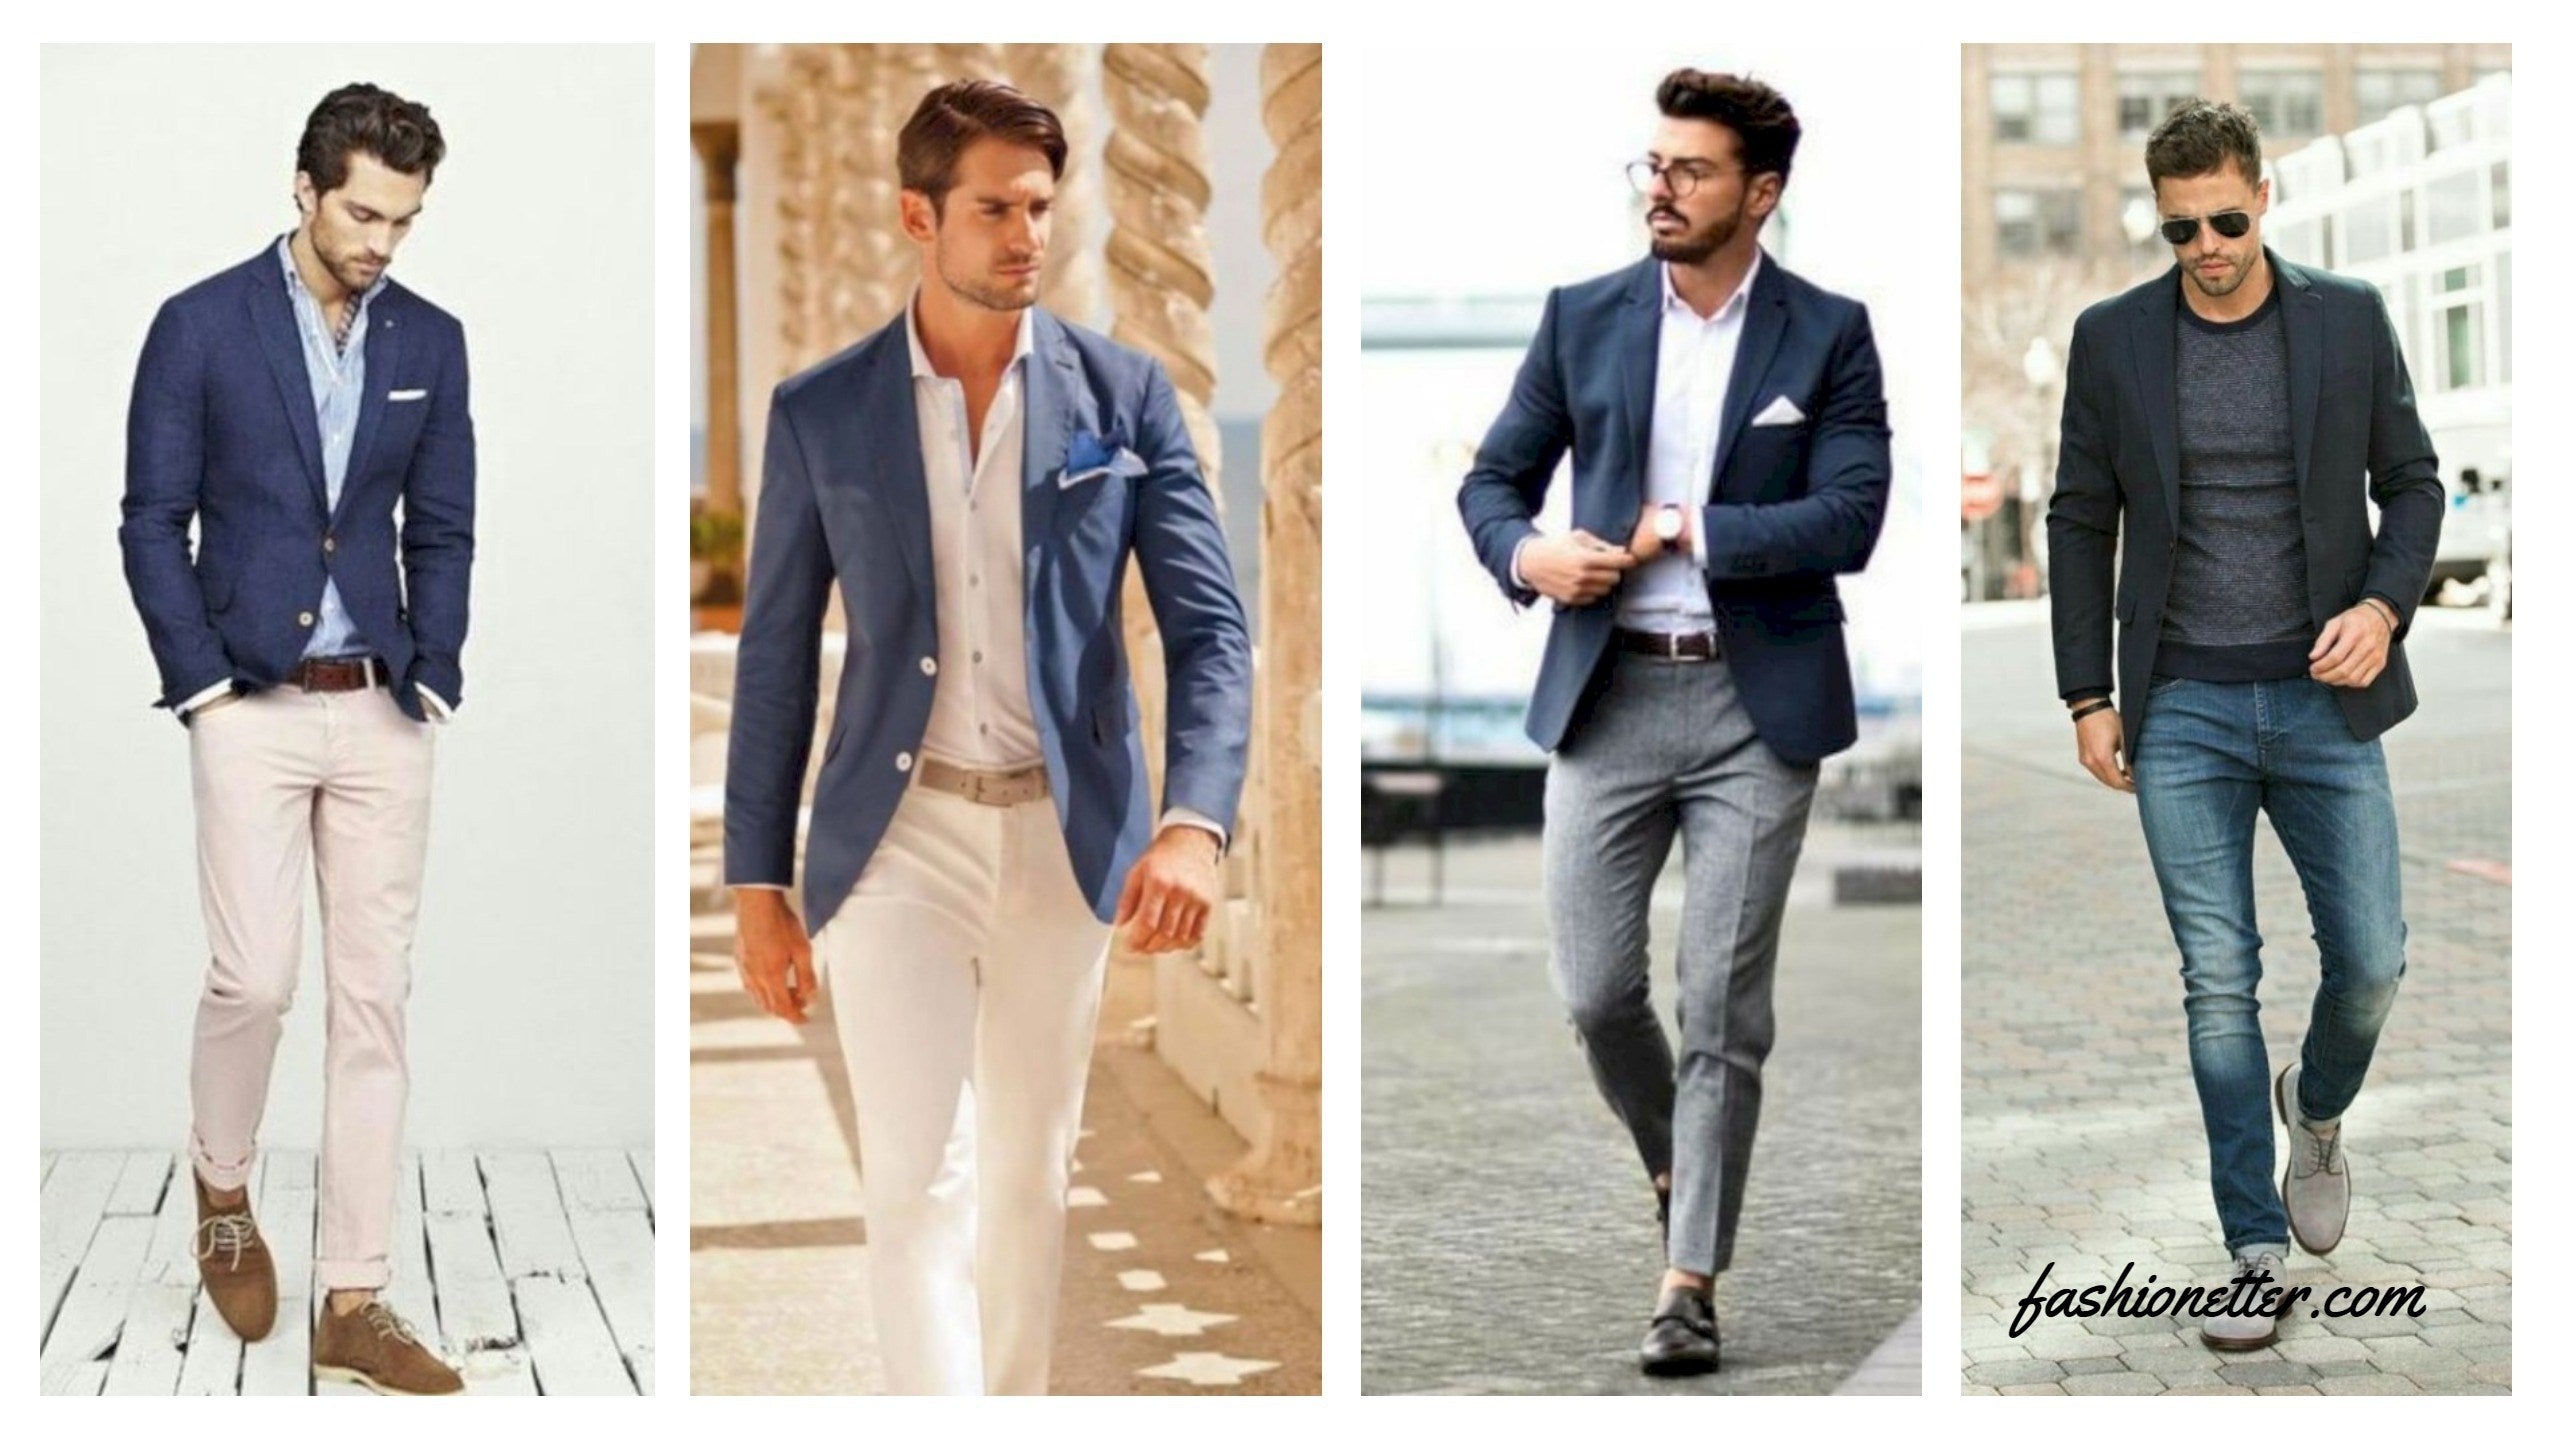 Men New Shirt High-end Sense Business Versatile Plaid Slim Fashion